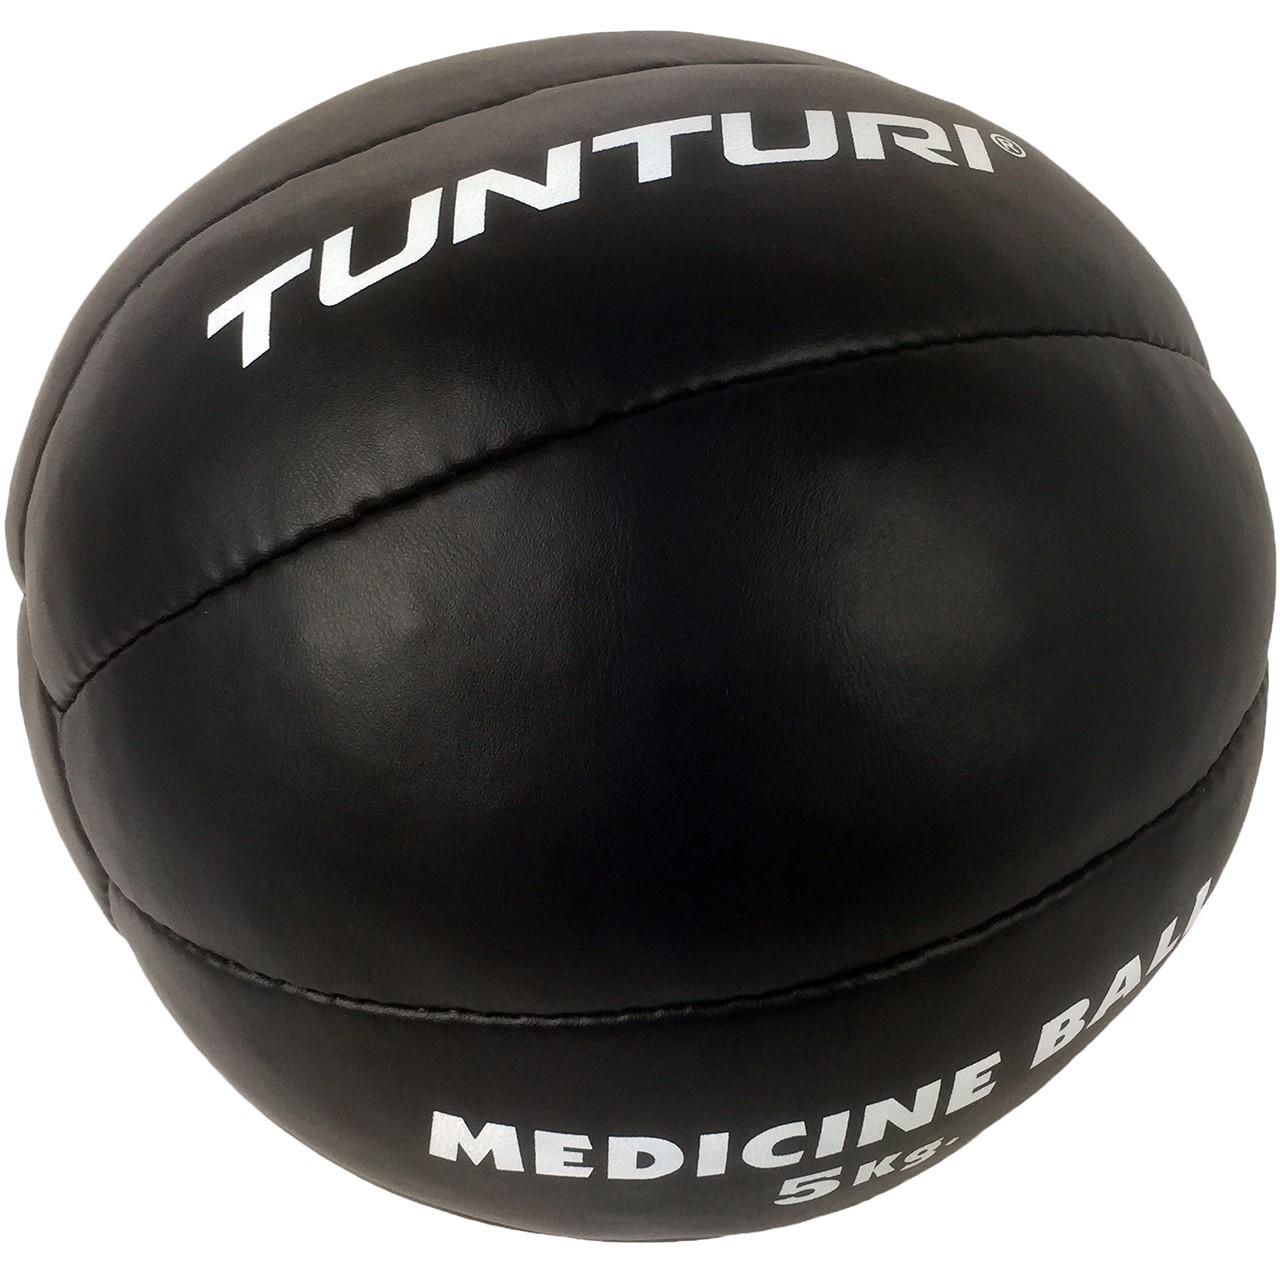 Tunturi Medicine Ball Black 5 kg